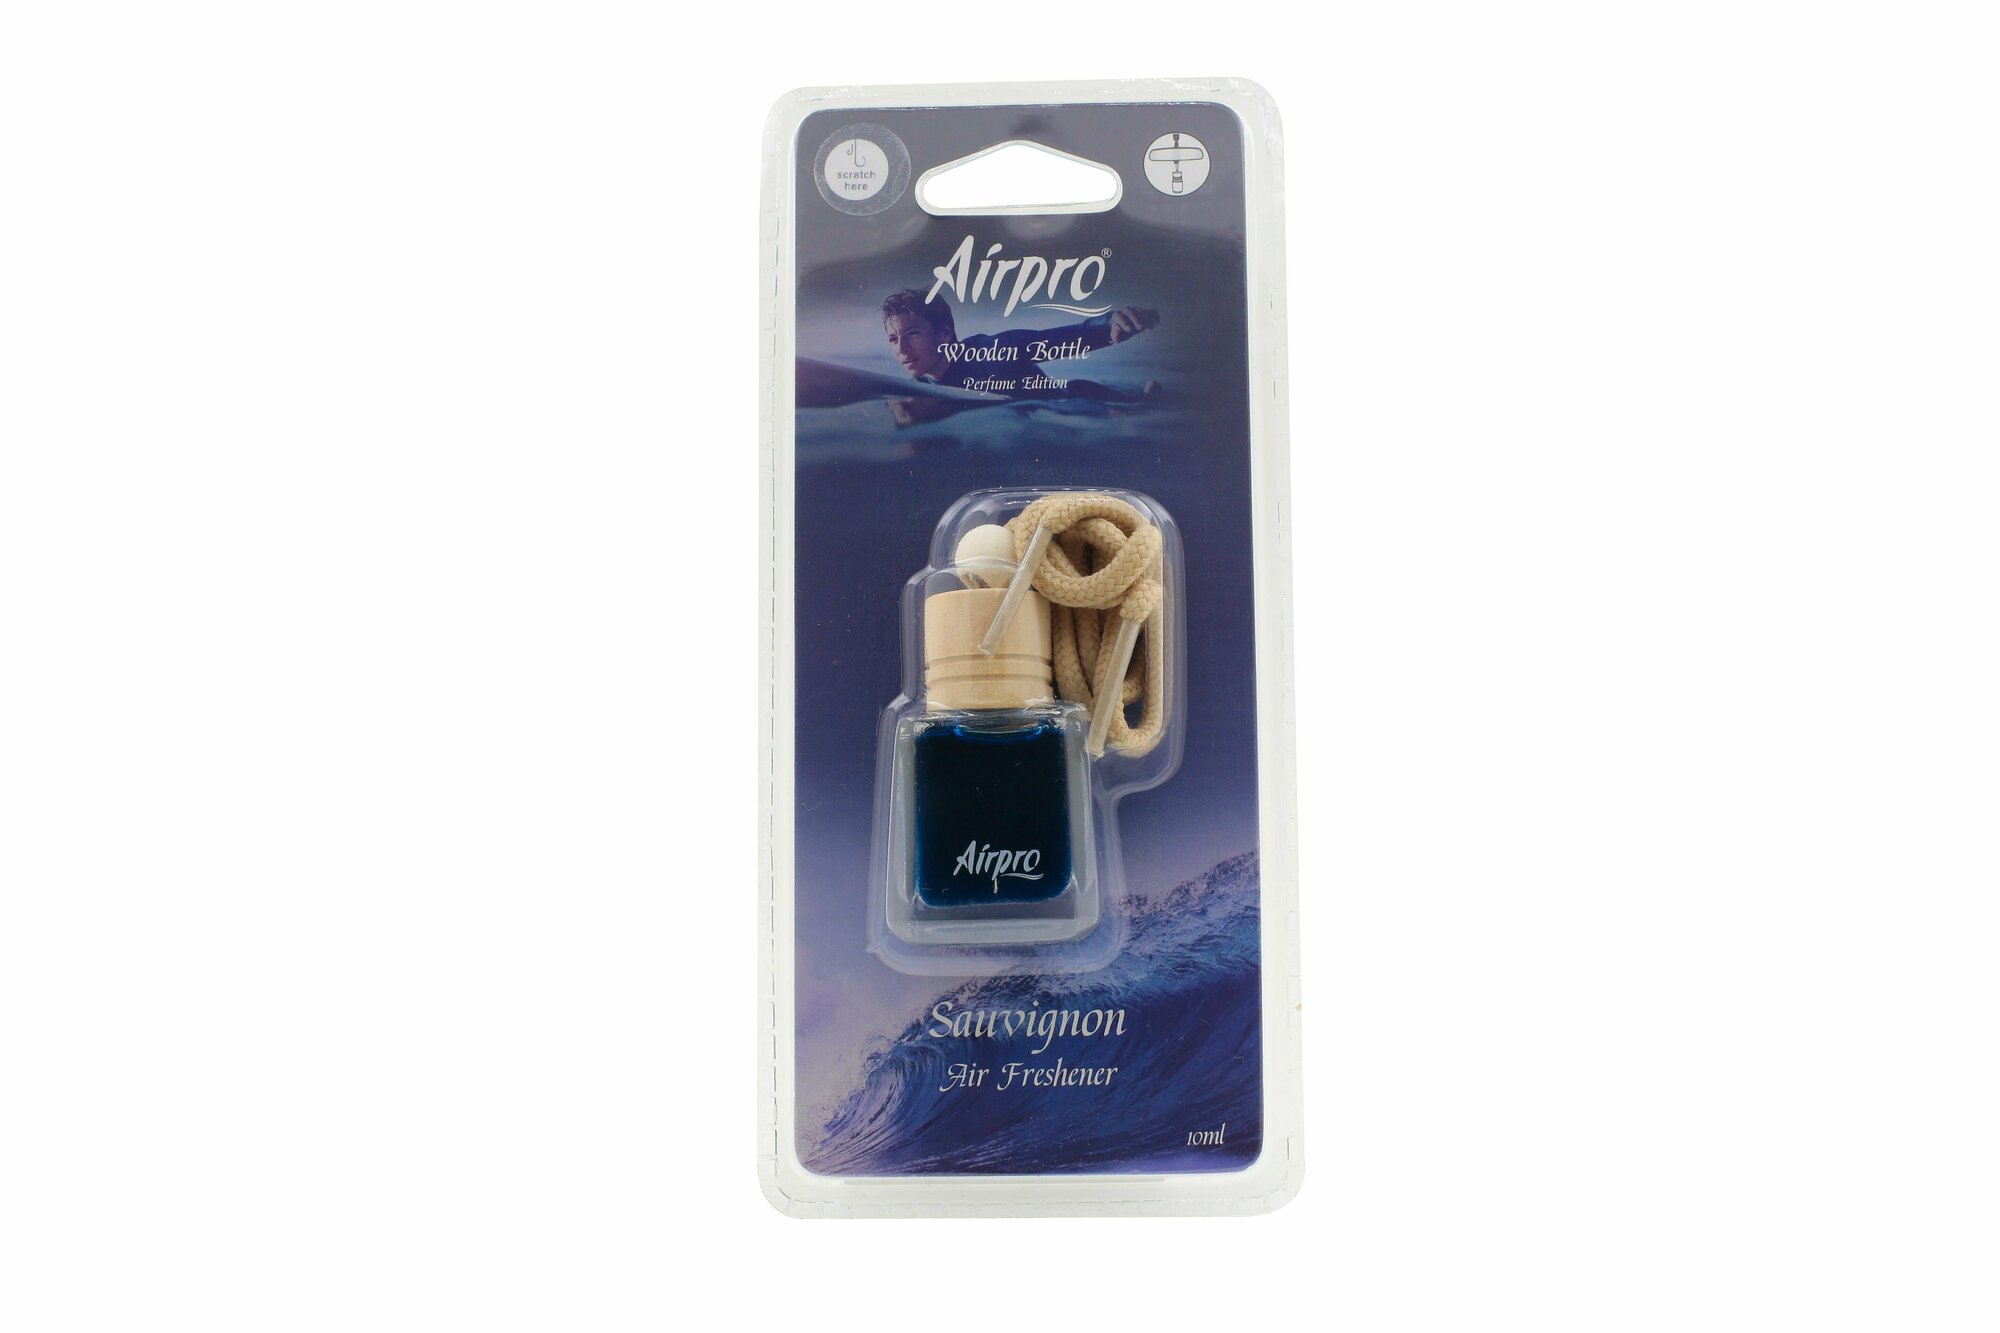 AirPro ароматизатор для автомобиля Wooden Bottle парфюм для автомобиля Air Freshener Sauvignon